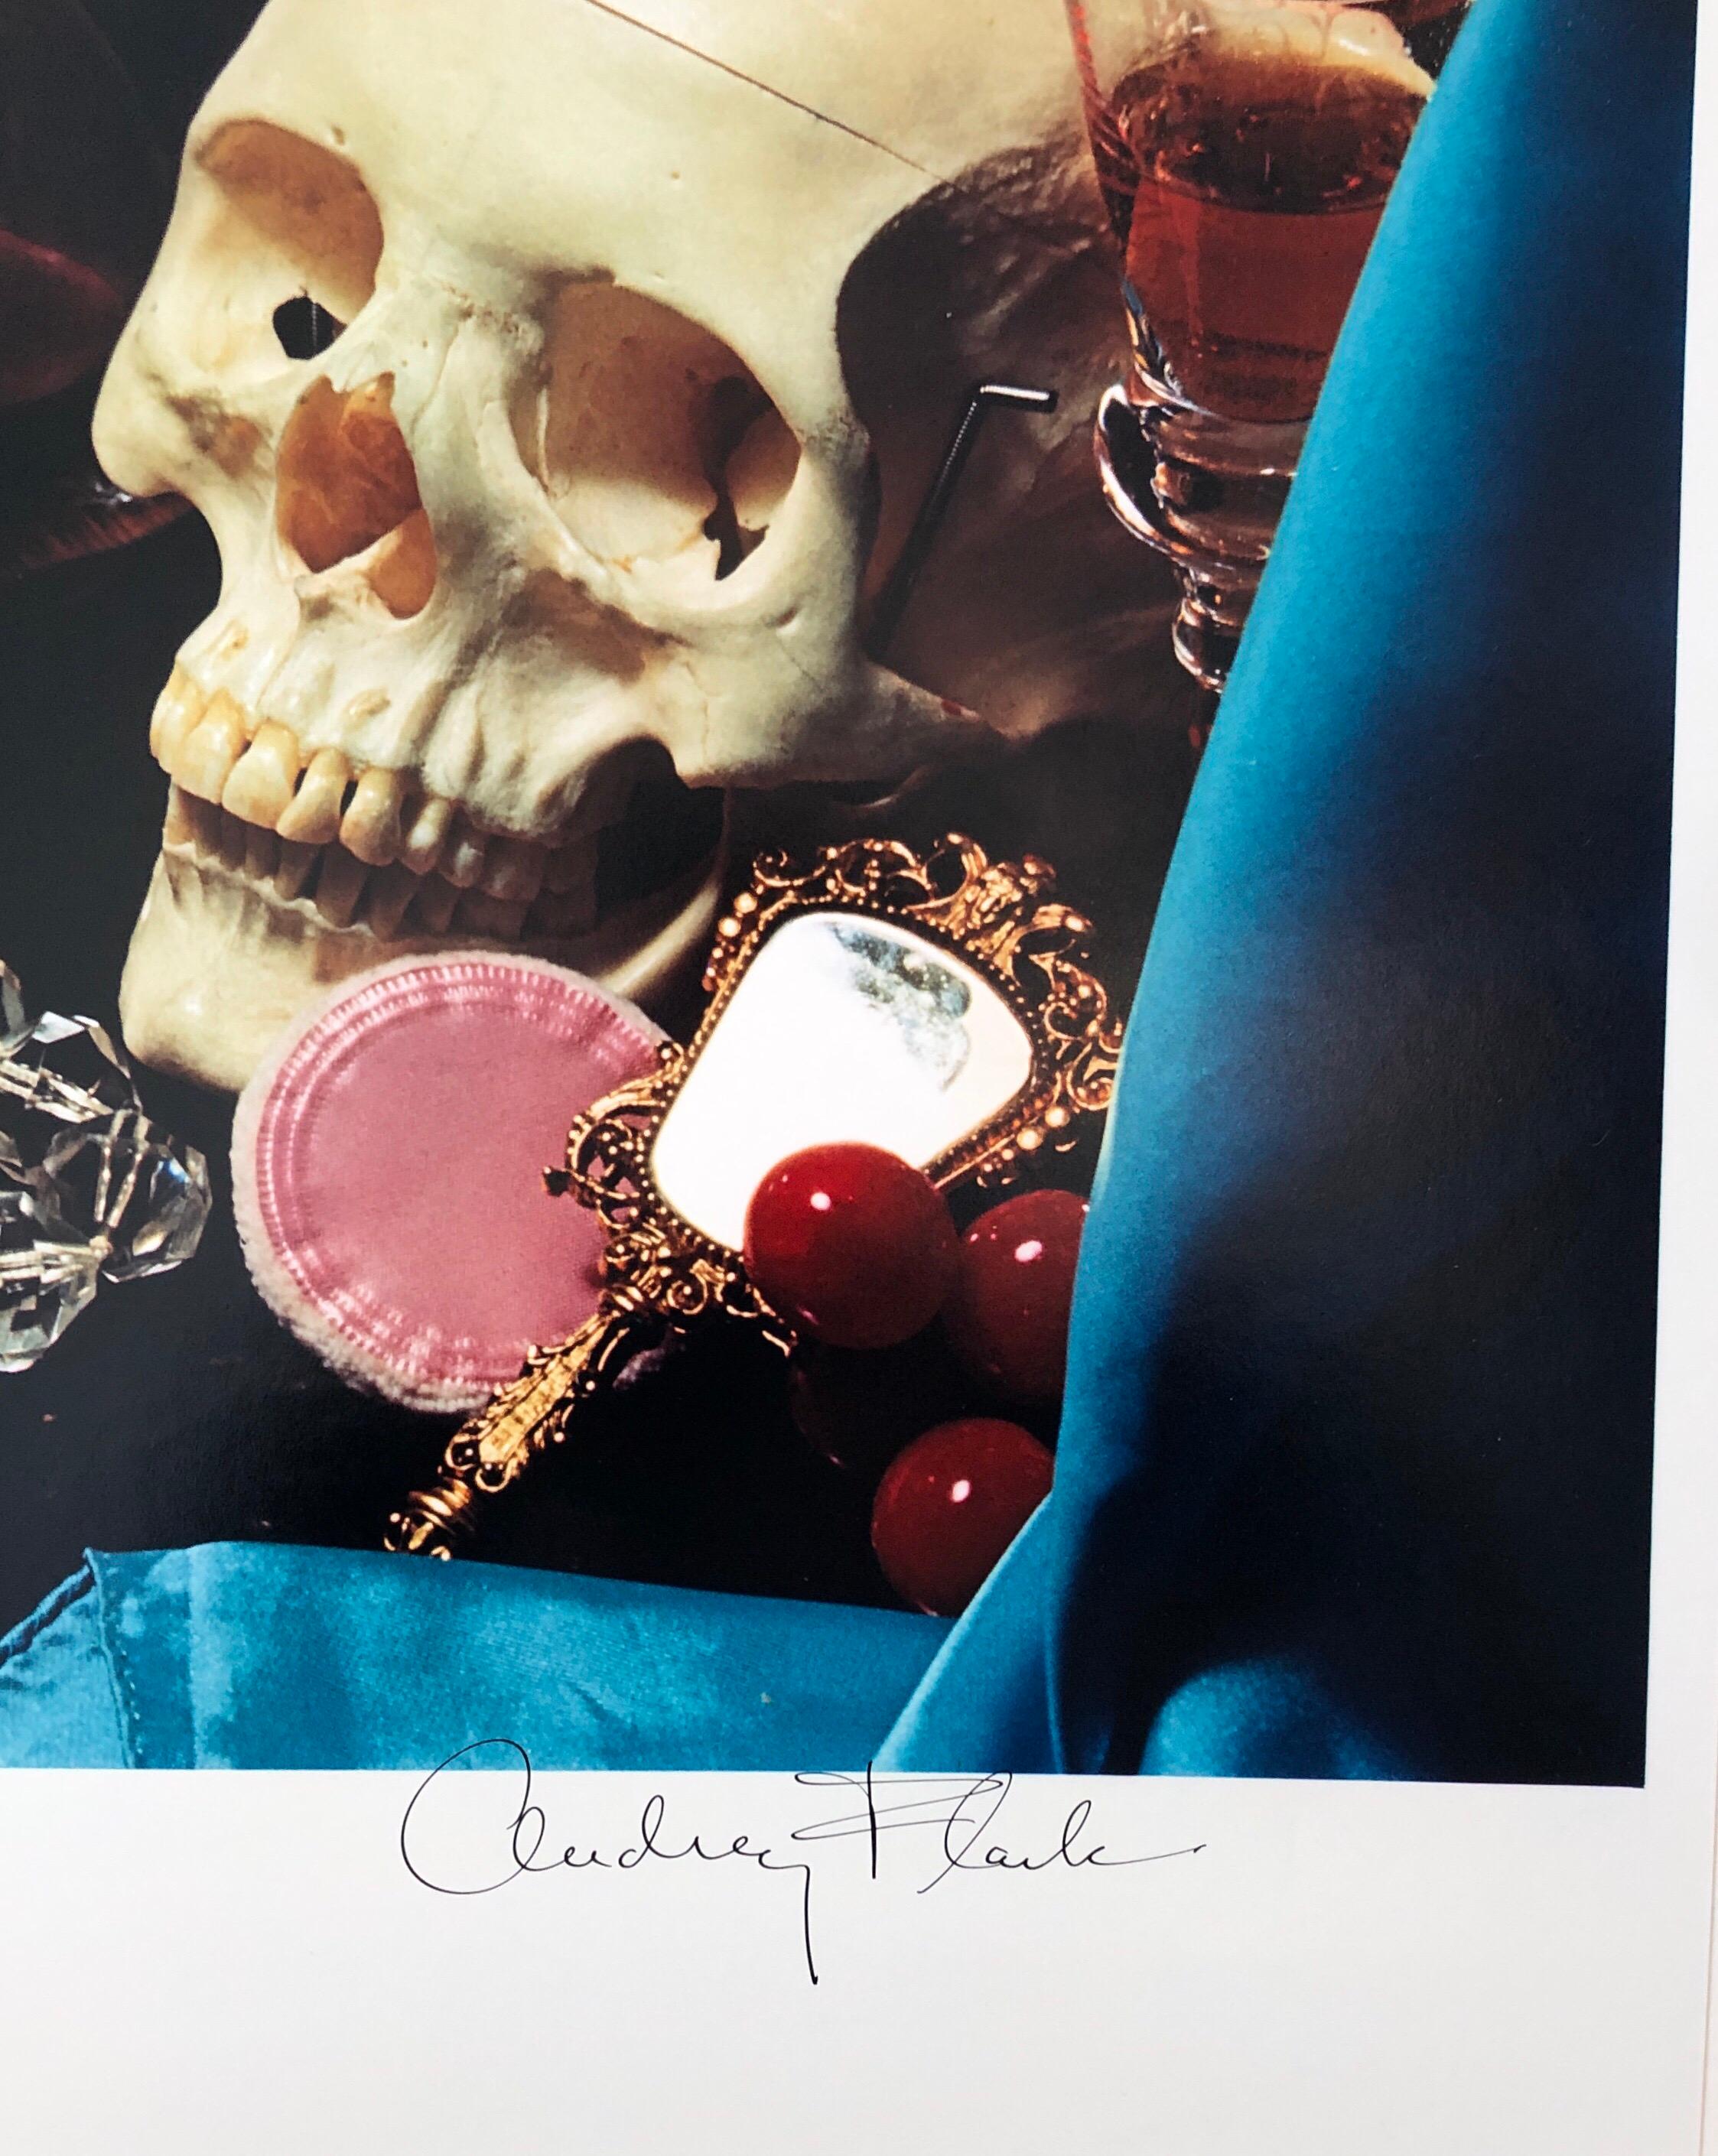 Pop Art Color Photograph Dye Transfer Print Audrey Flack Tarot Card, Skull Photo For Sale 5